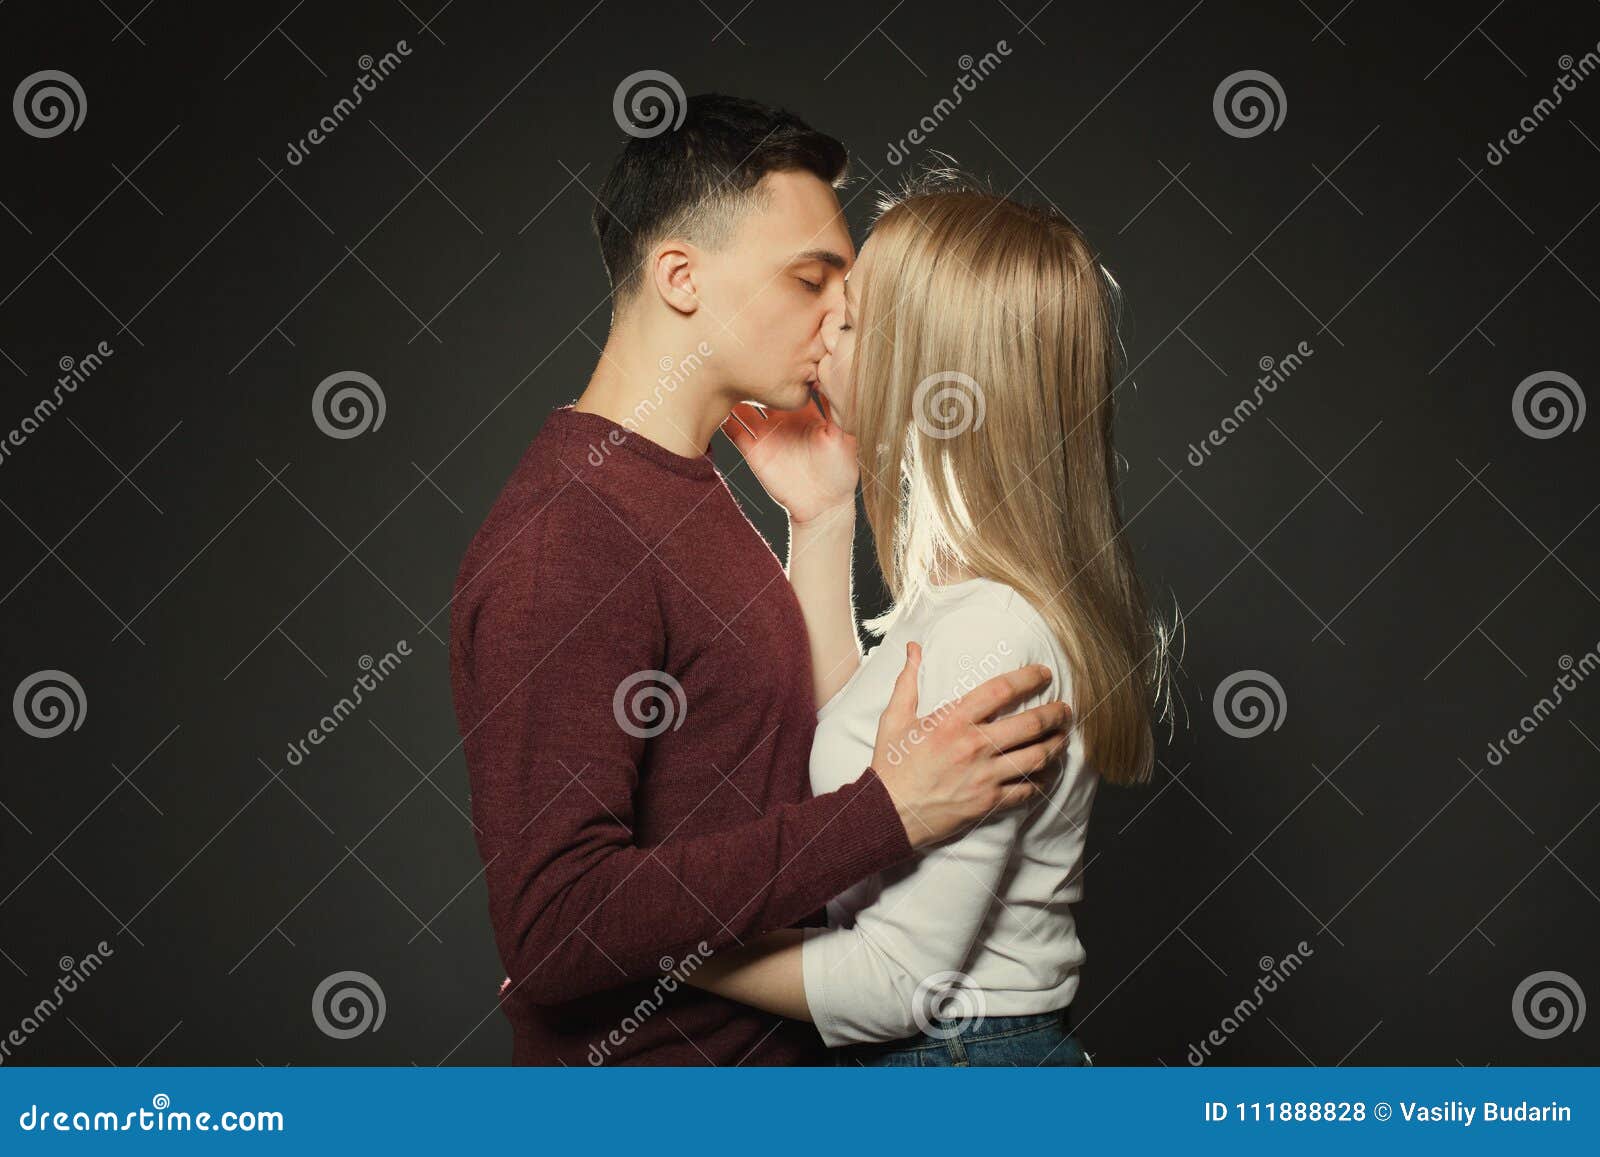 girls kissing lesbian licking beauty